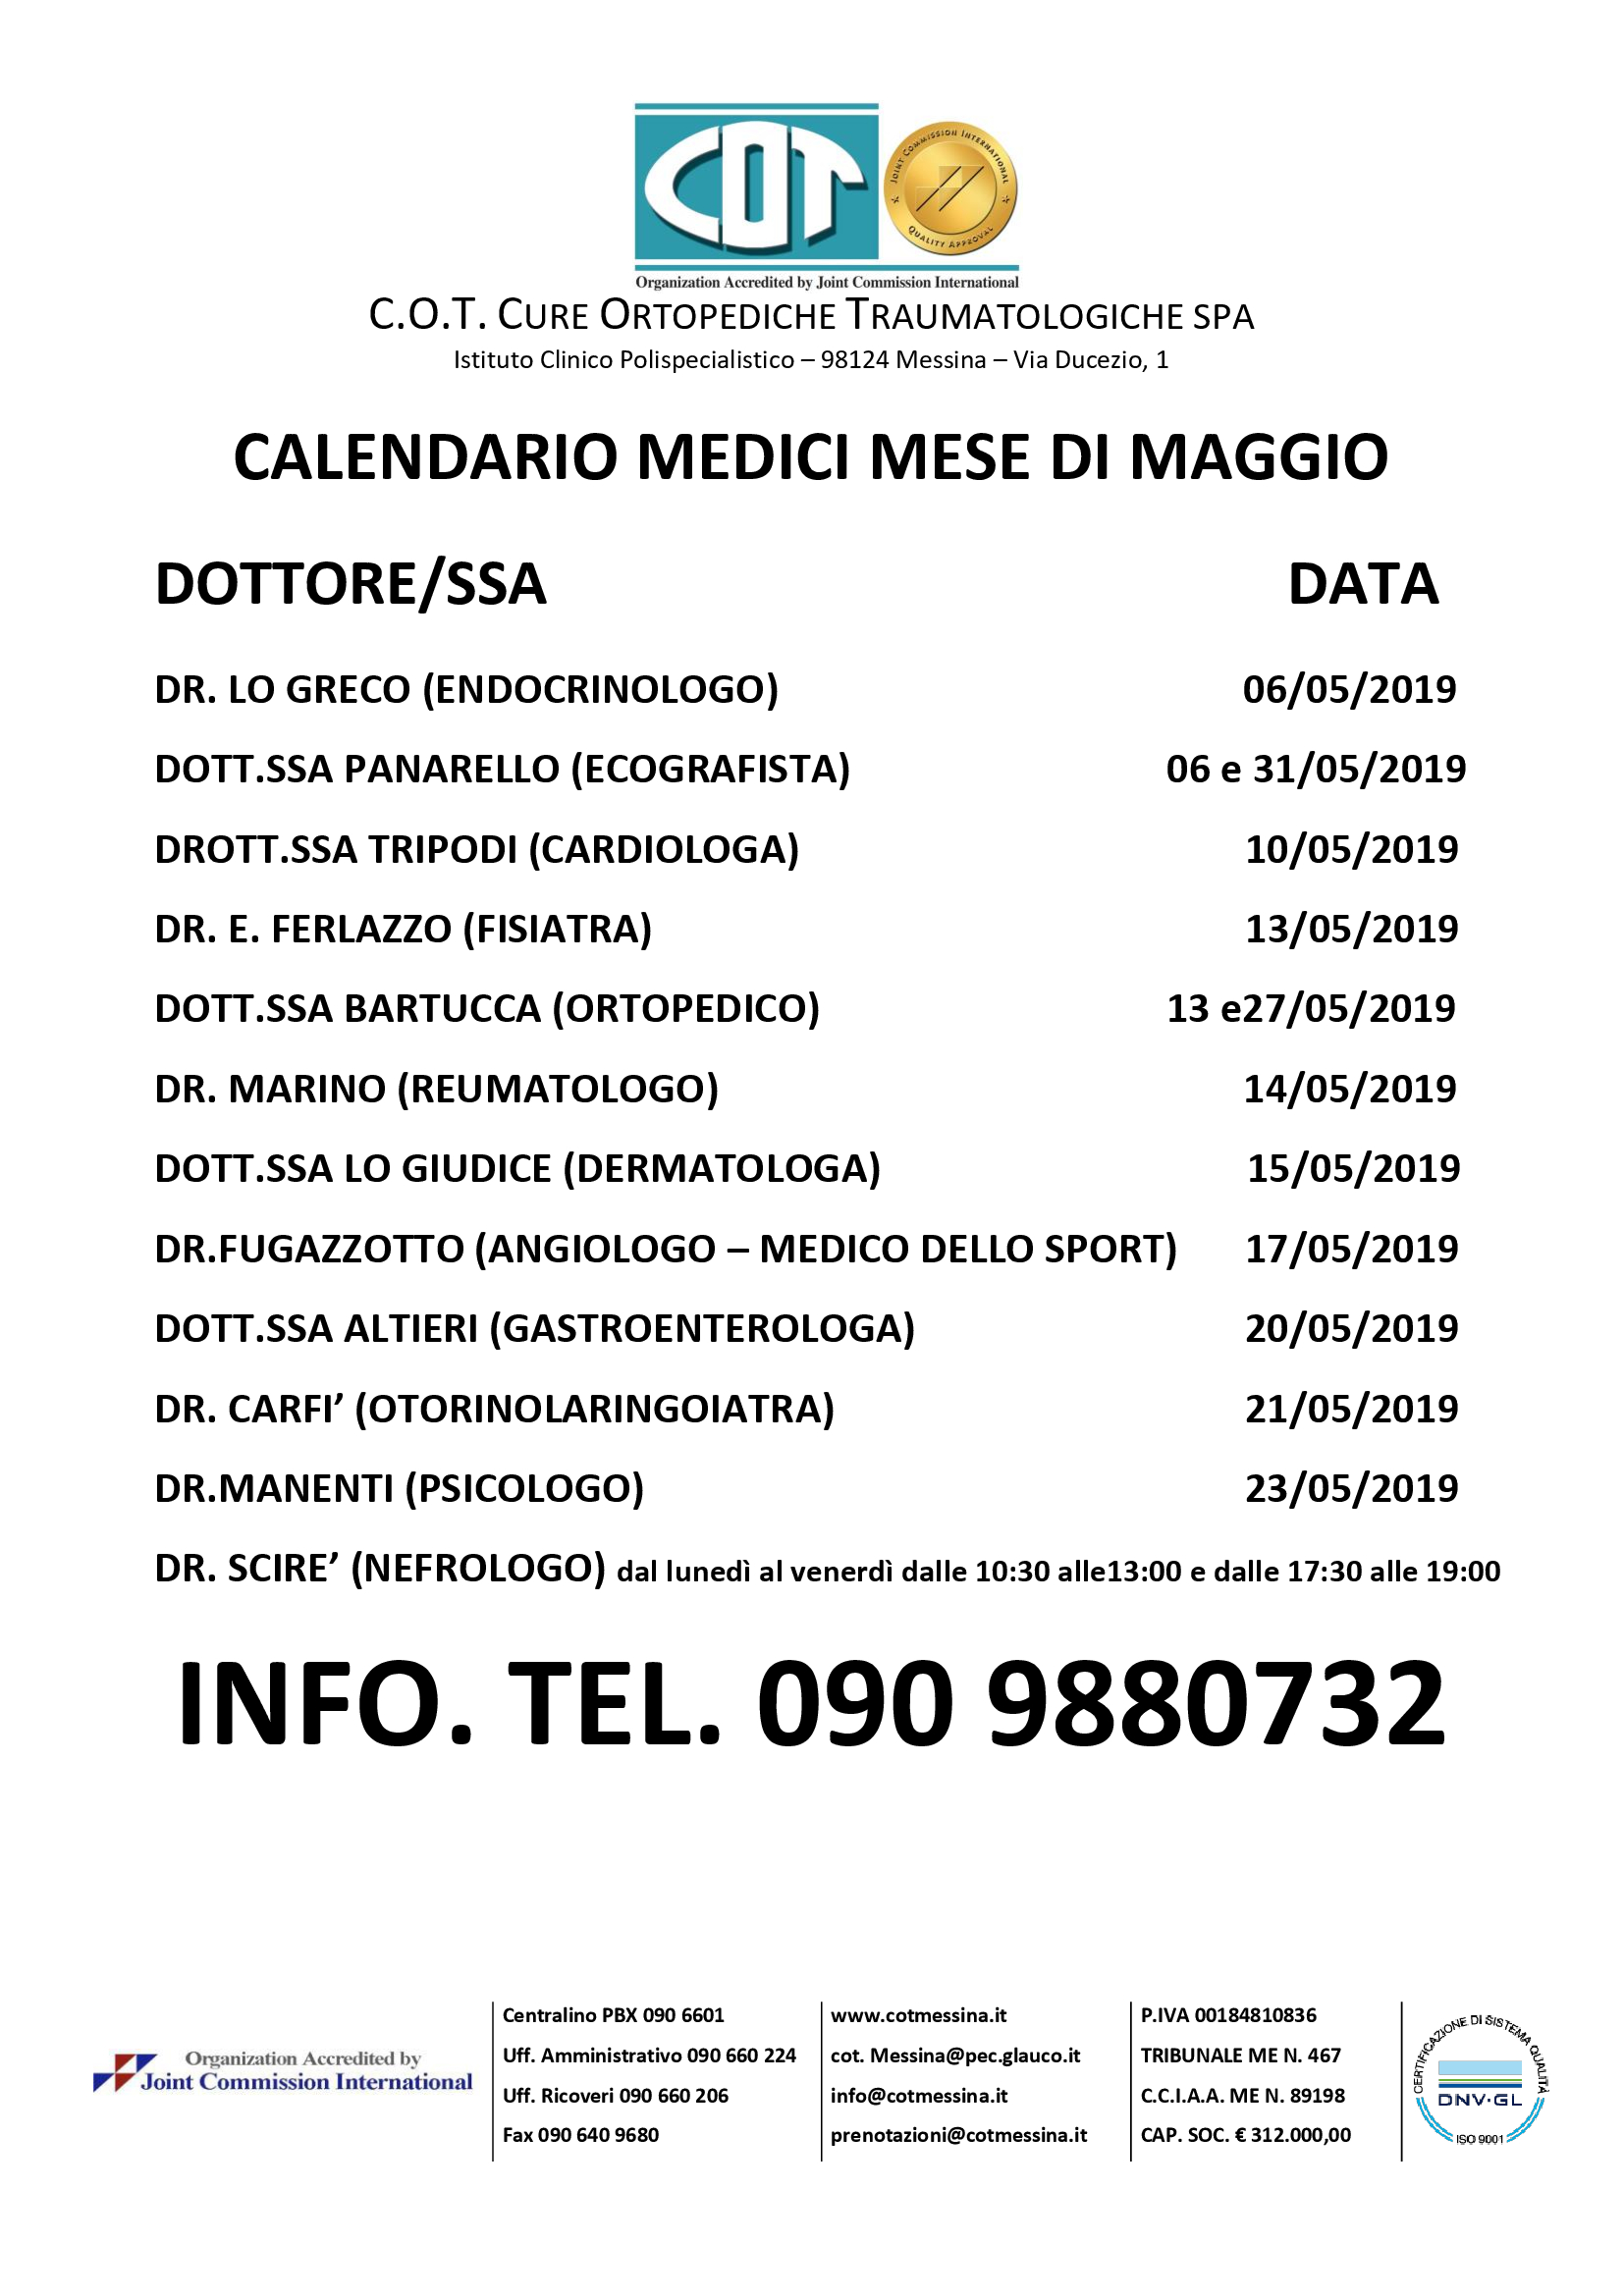 CALENDARIO MEDICI MAGGIO.jpg